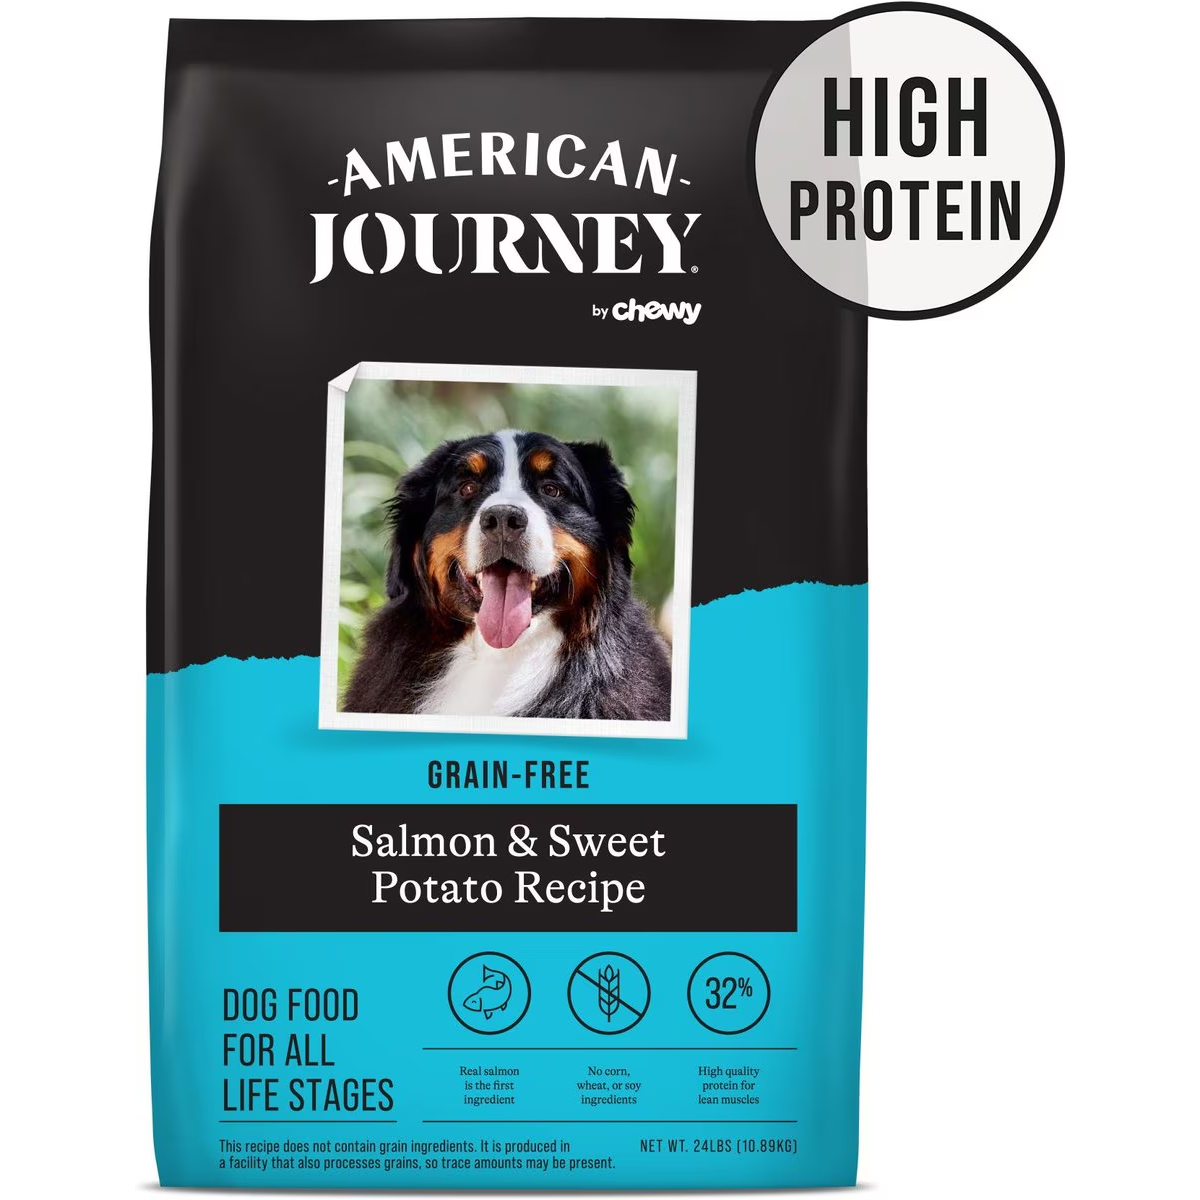 American Journey Grain-Free Salmon & Sweet Potato Recipe Dry Dog Food